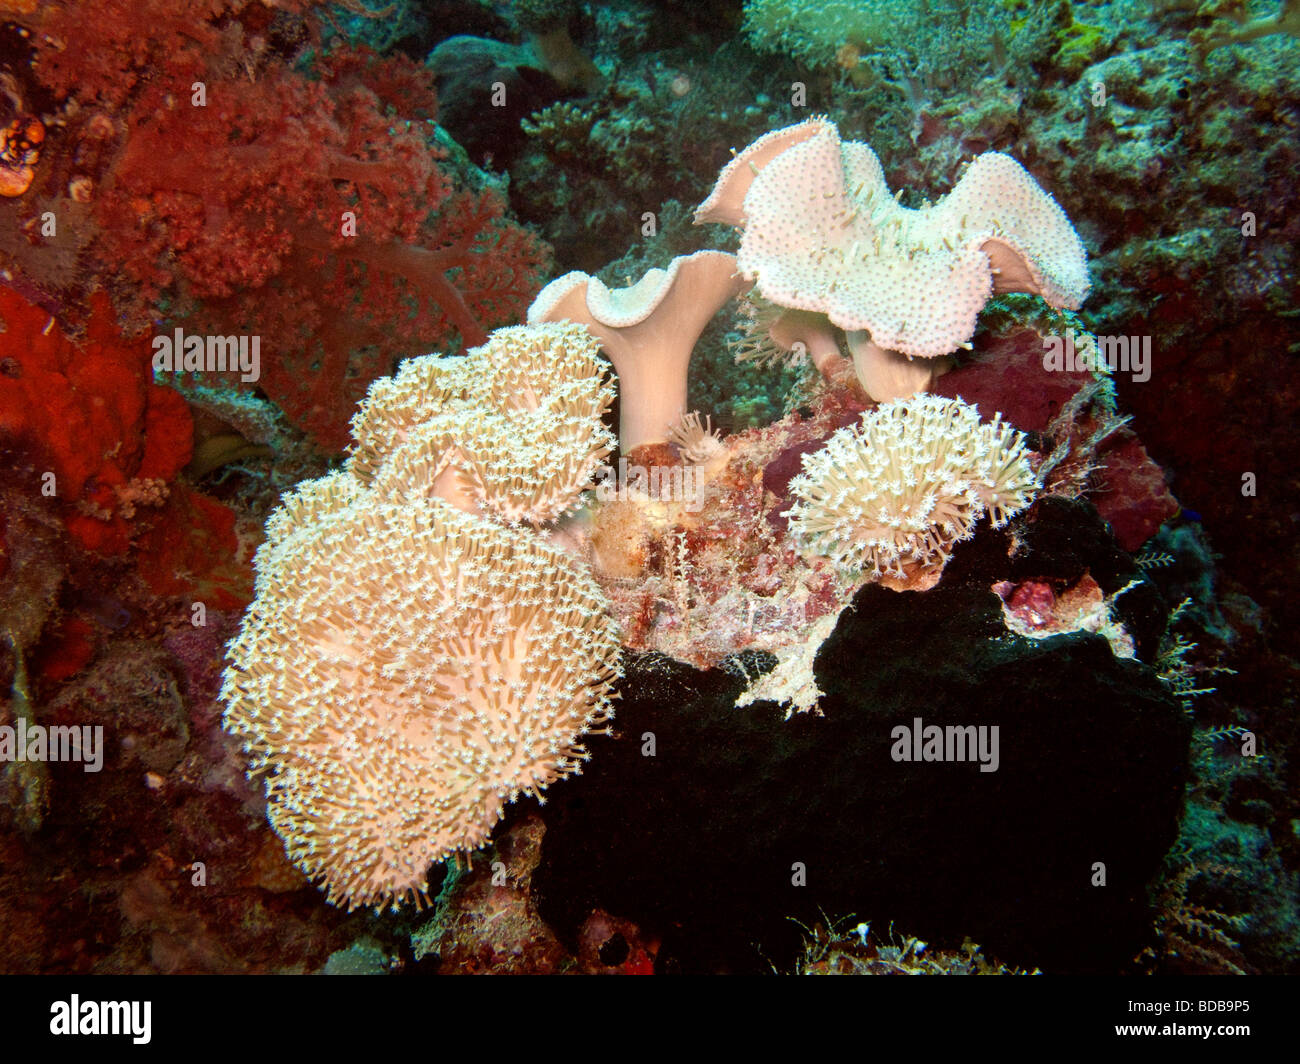 Indonesien Sulawesi Wakatobi Nationalpark Blume weichen Korallen Xenia sp auf bunten Riff Stockfoto